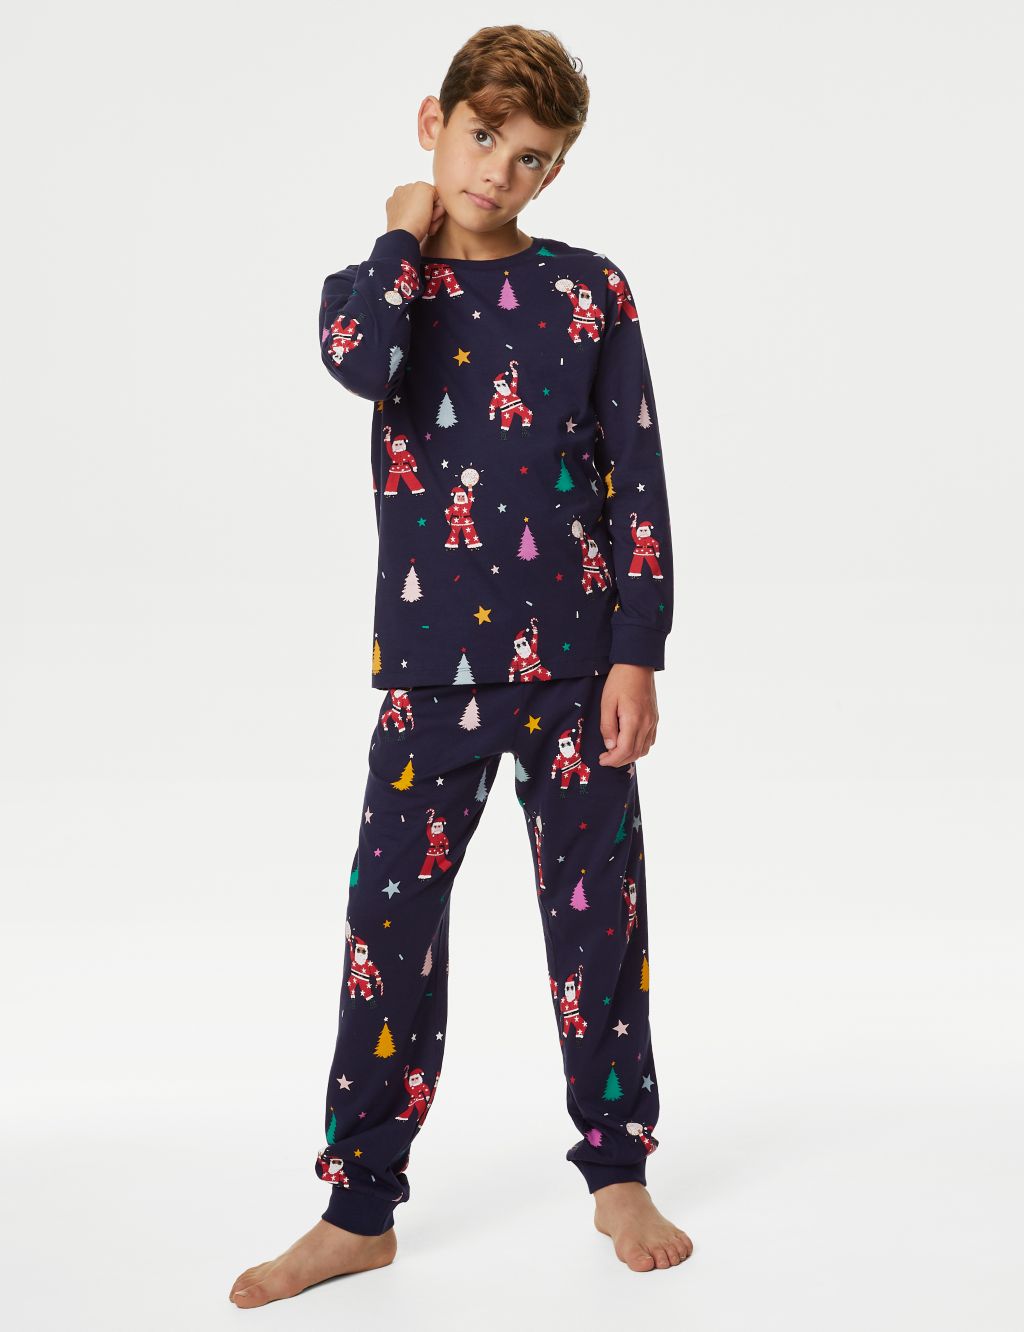 Kids' Disco Santa Family Christmas Pyjama Set (1-16 Yrs) image 1